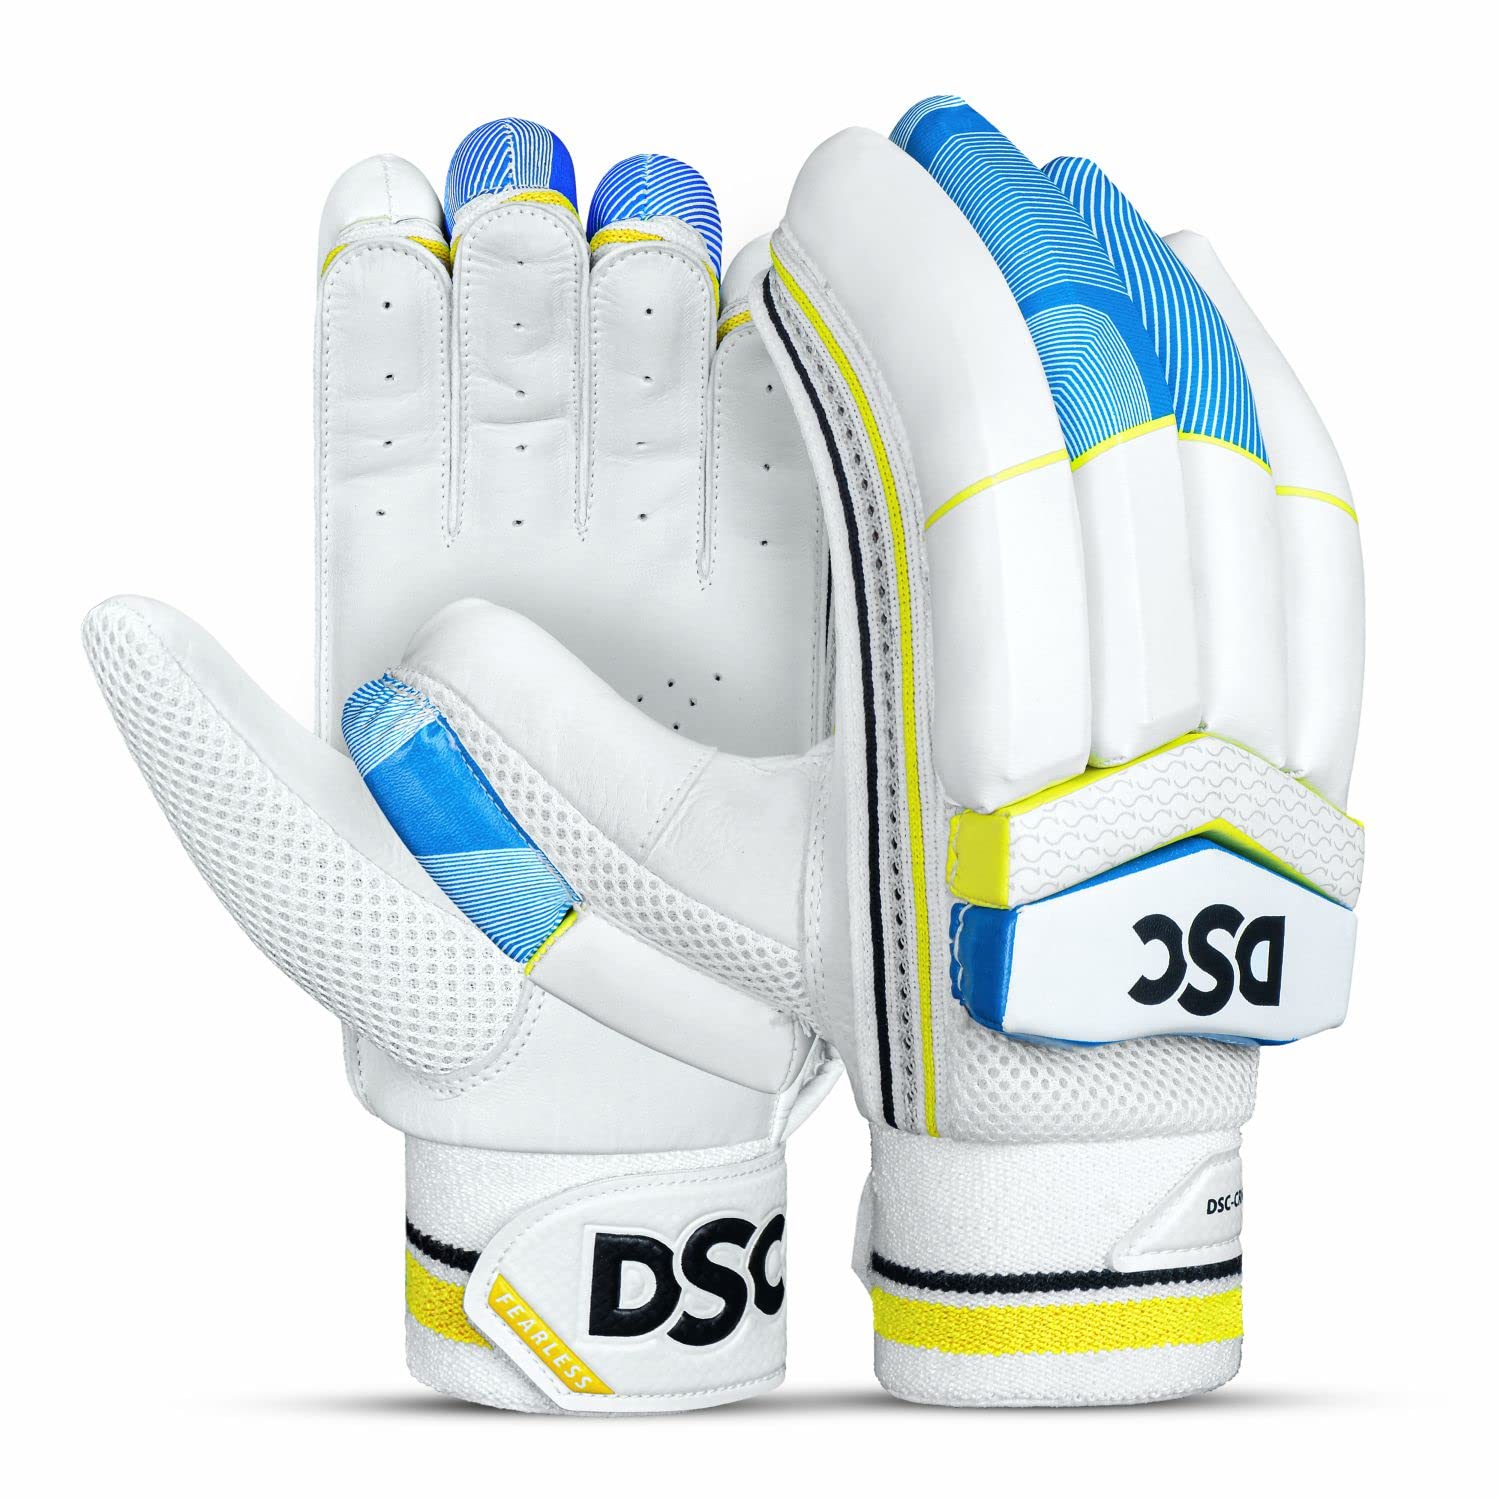 DSC Condor Motion Leather Cricket Batting Gloves, Mens Right (Orange White)